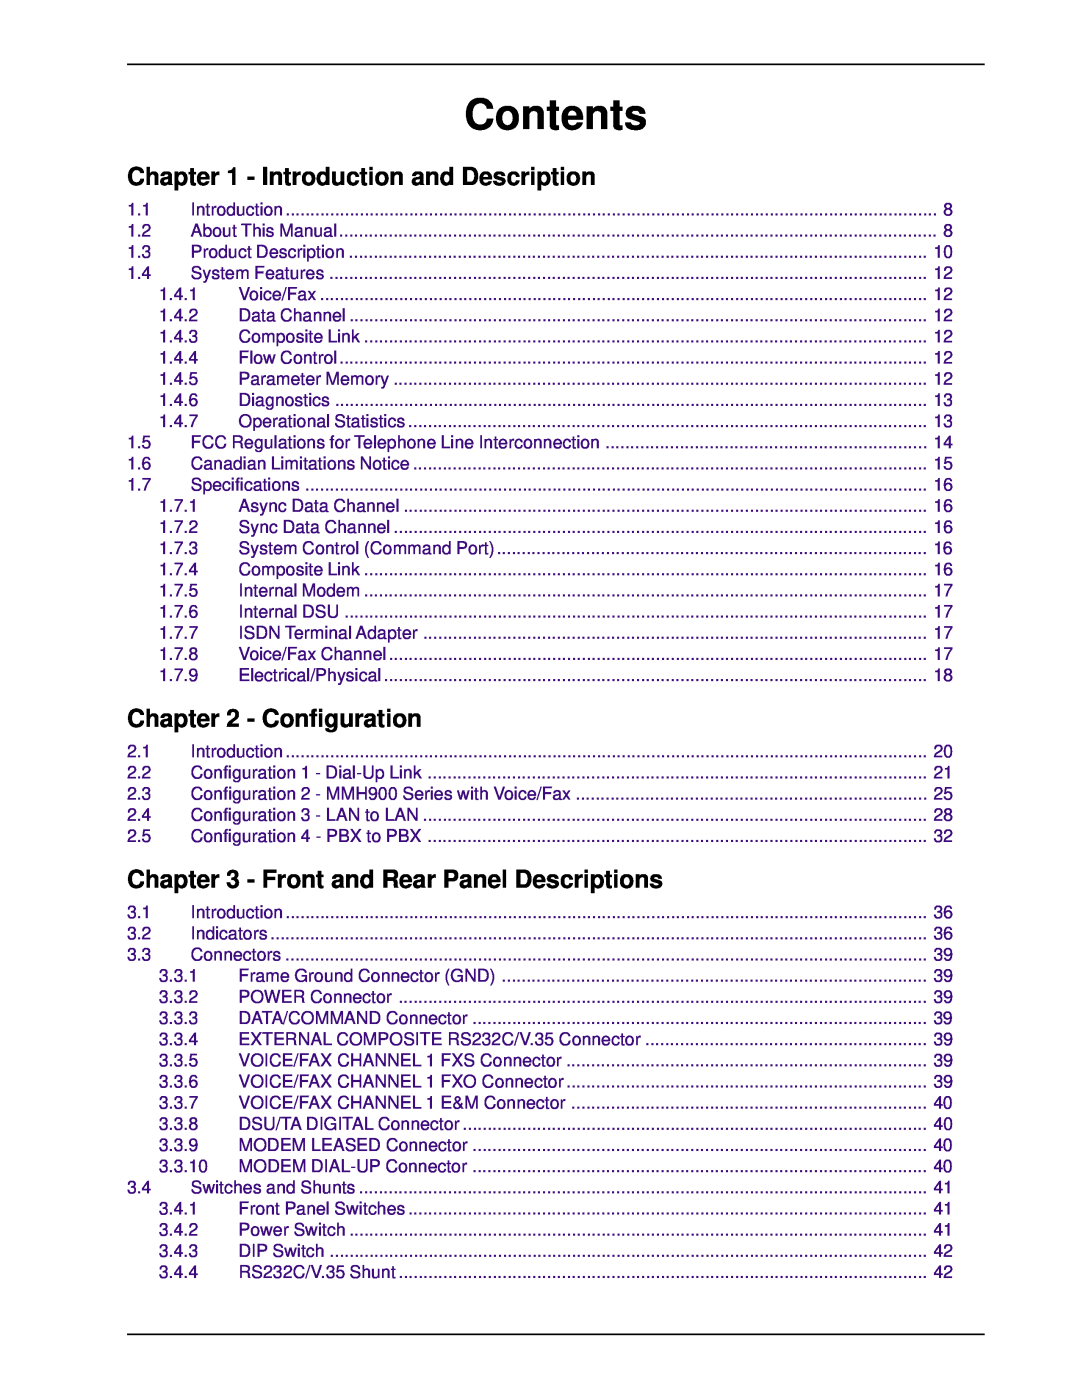 Multi-Tech Systems DT102/xx Introduction and Description, Configuration, Front and Rear Panel Descriptions, Contents 